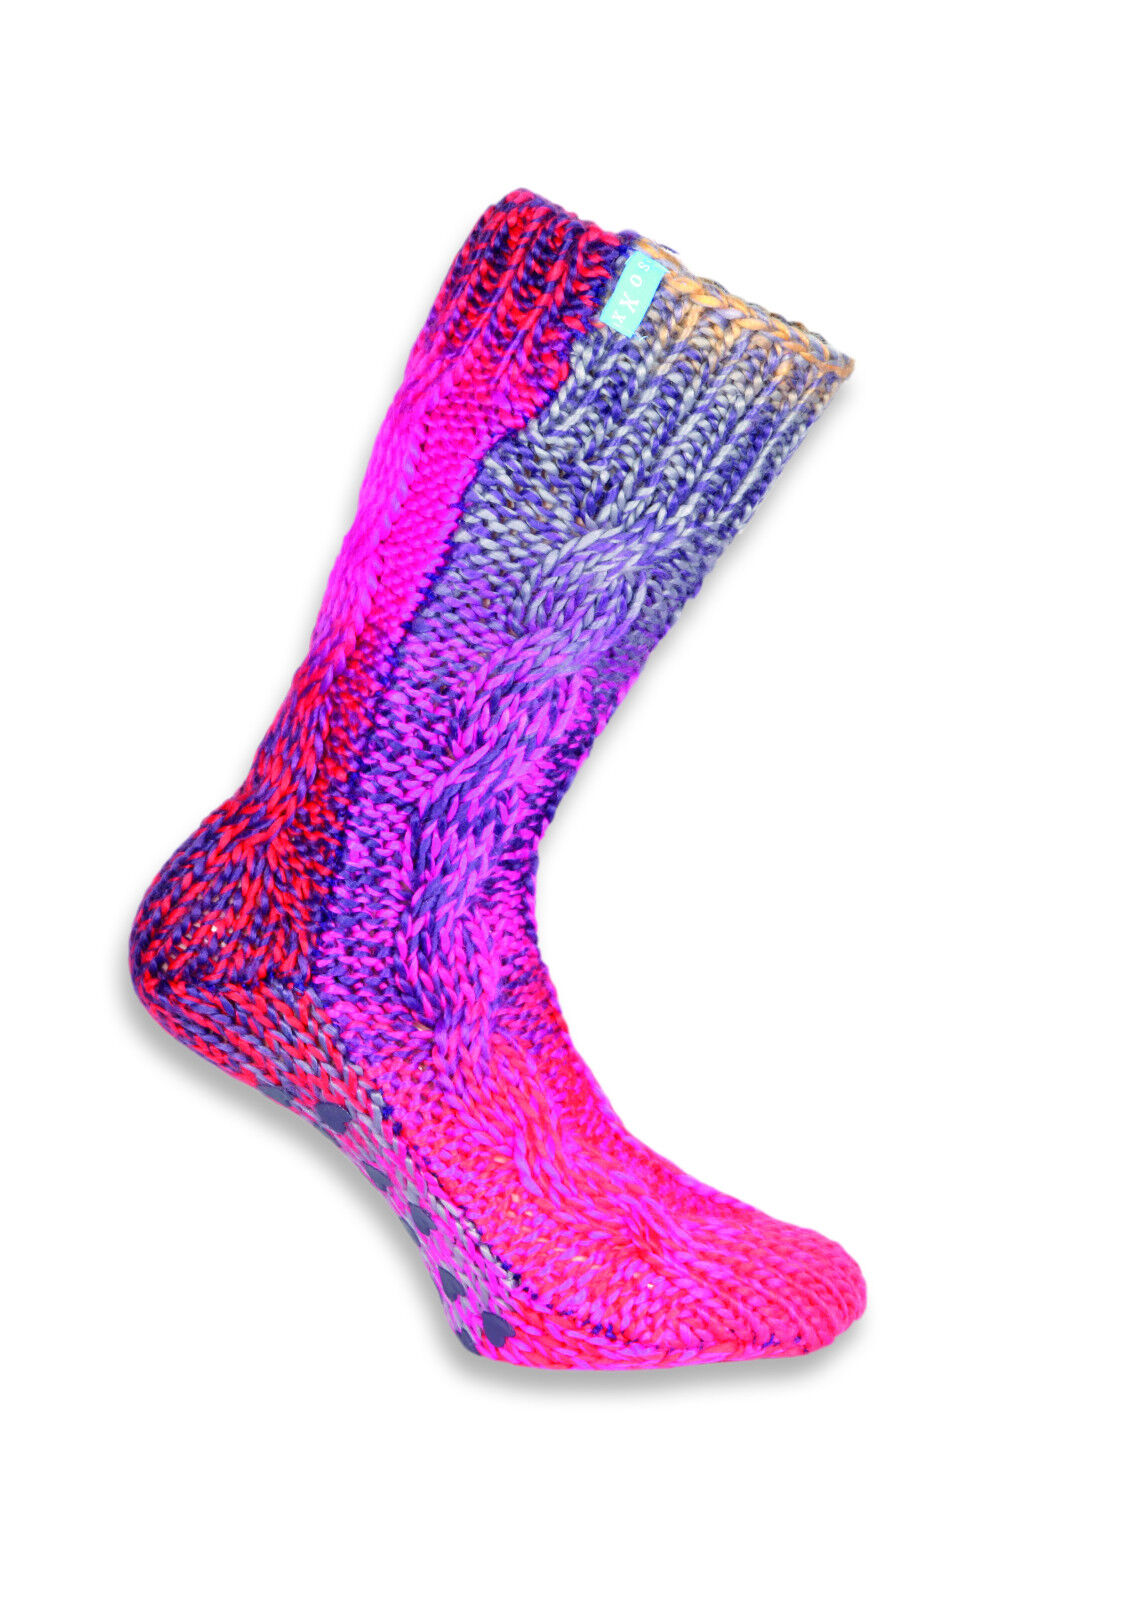 1 pair of warm soft colorful ABS socks home socks cuddly socks women children